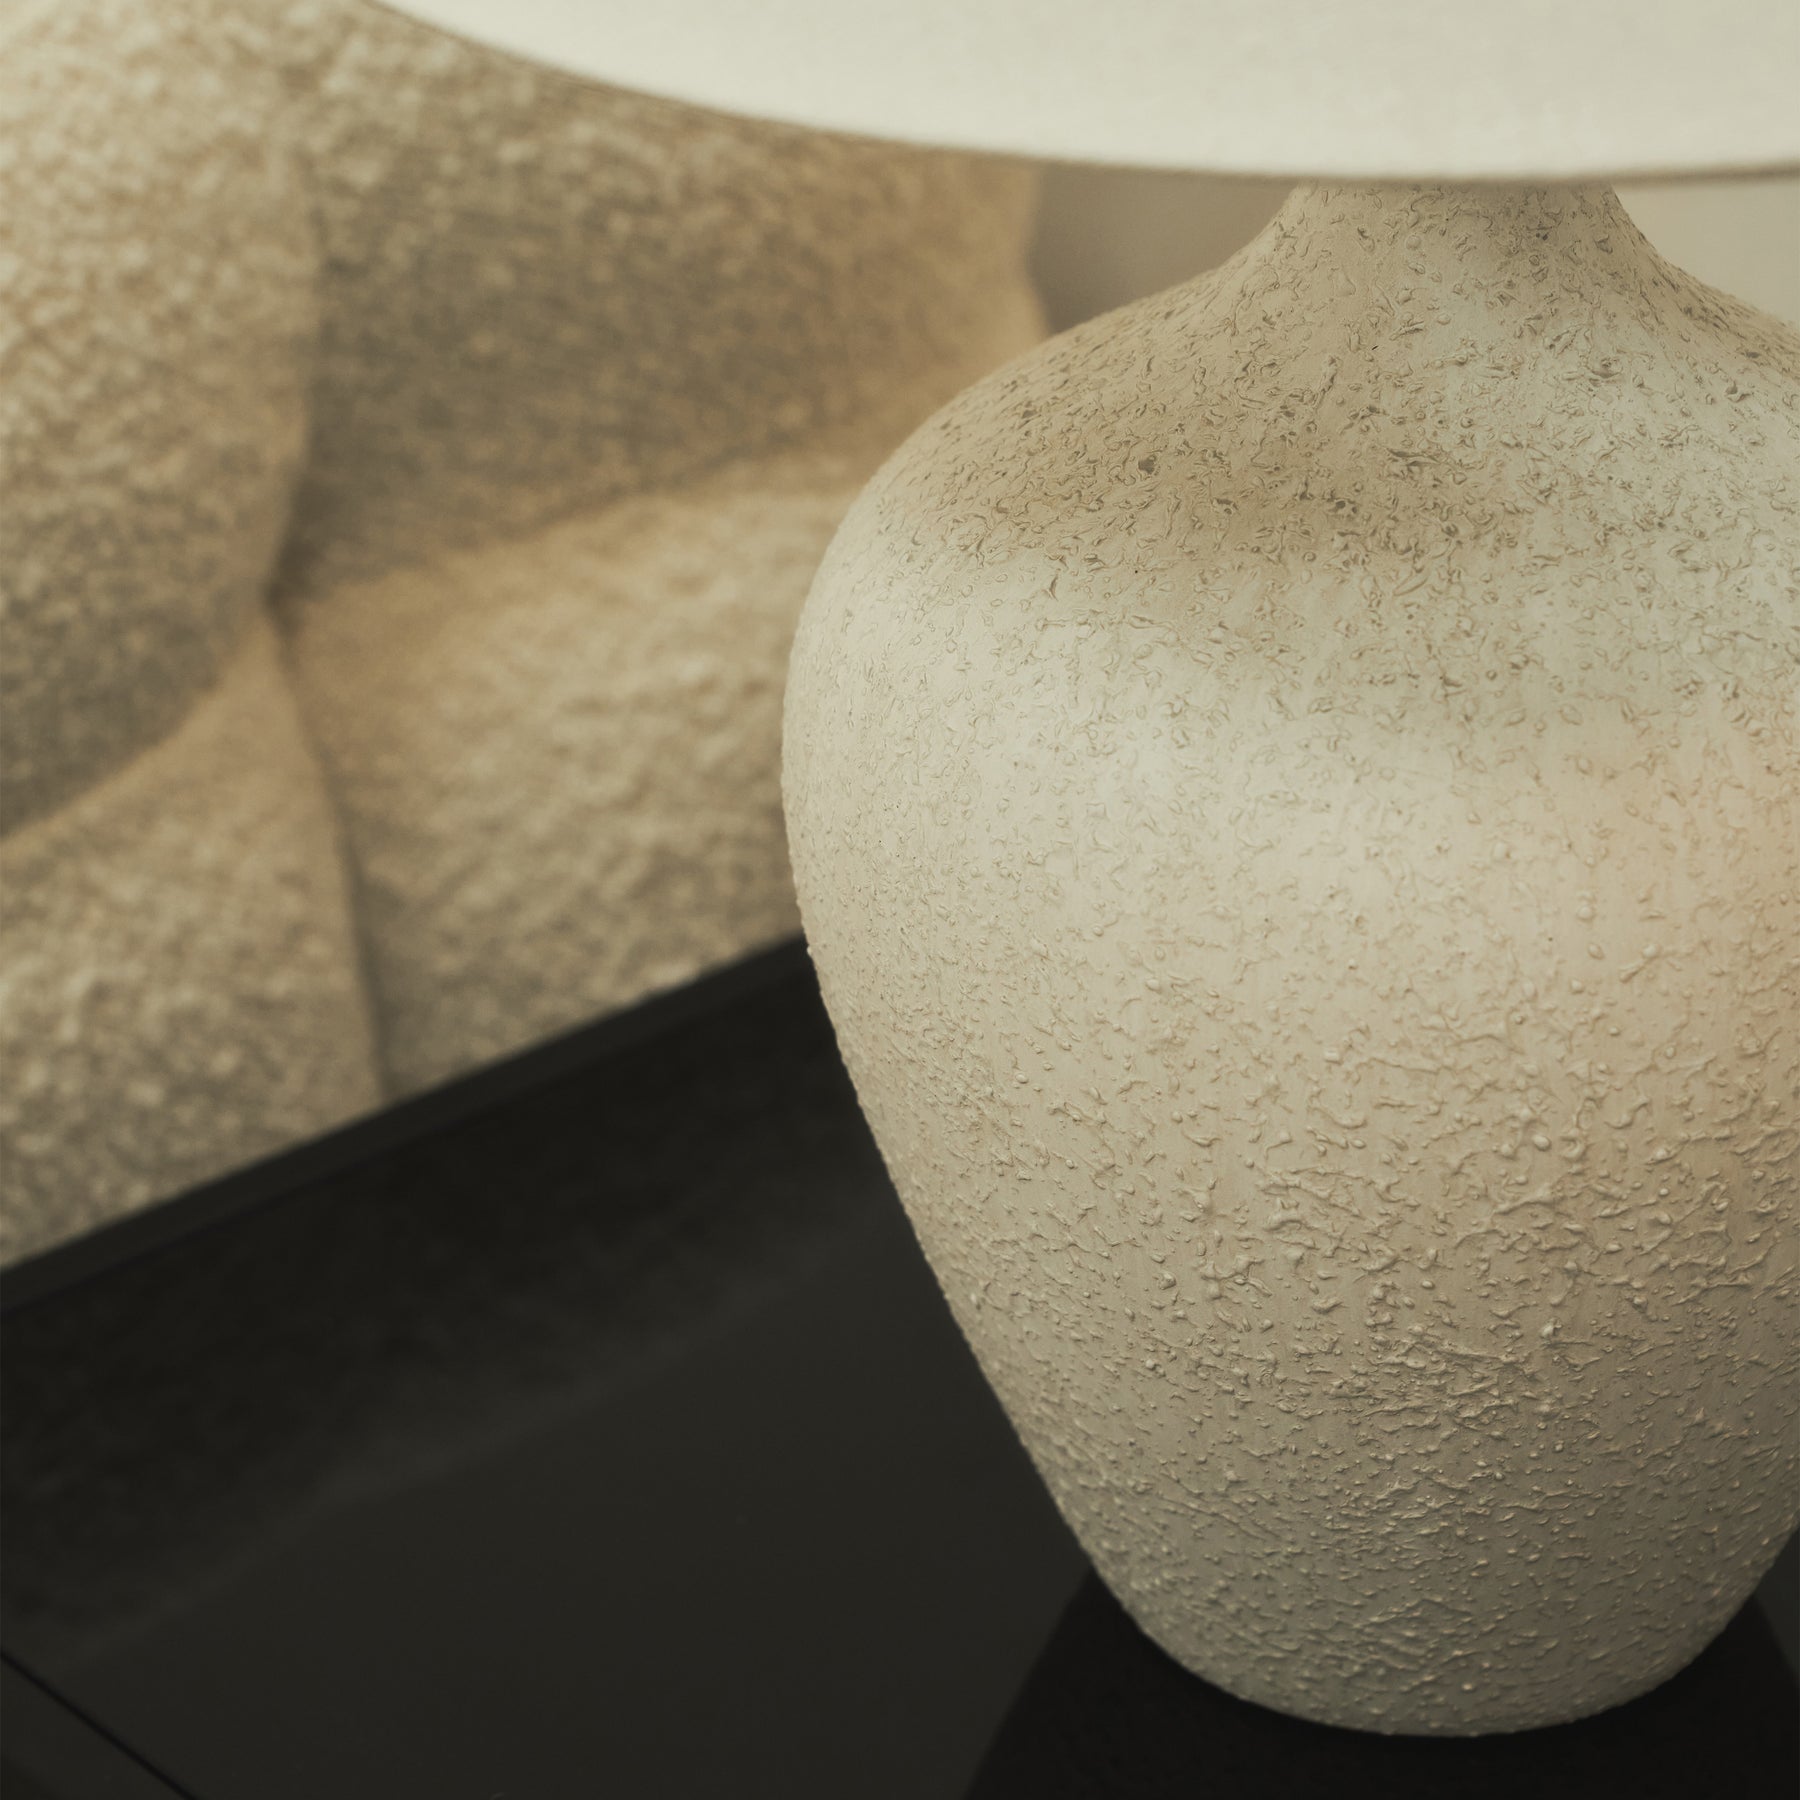 Textured Ceramic Based Table Lamp Natural Shade detail shot of texture